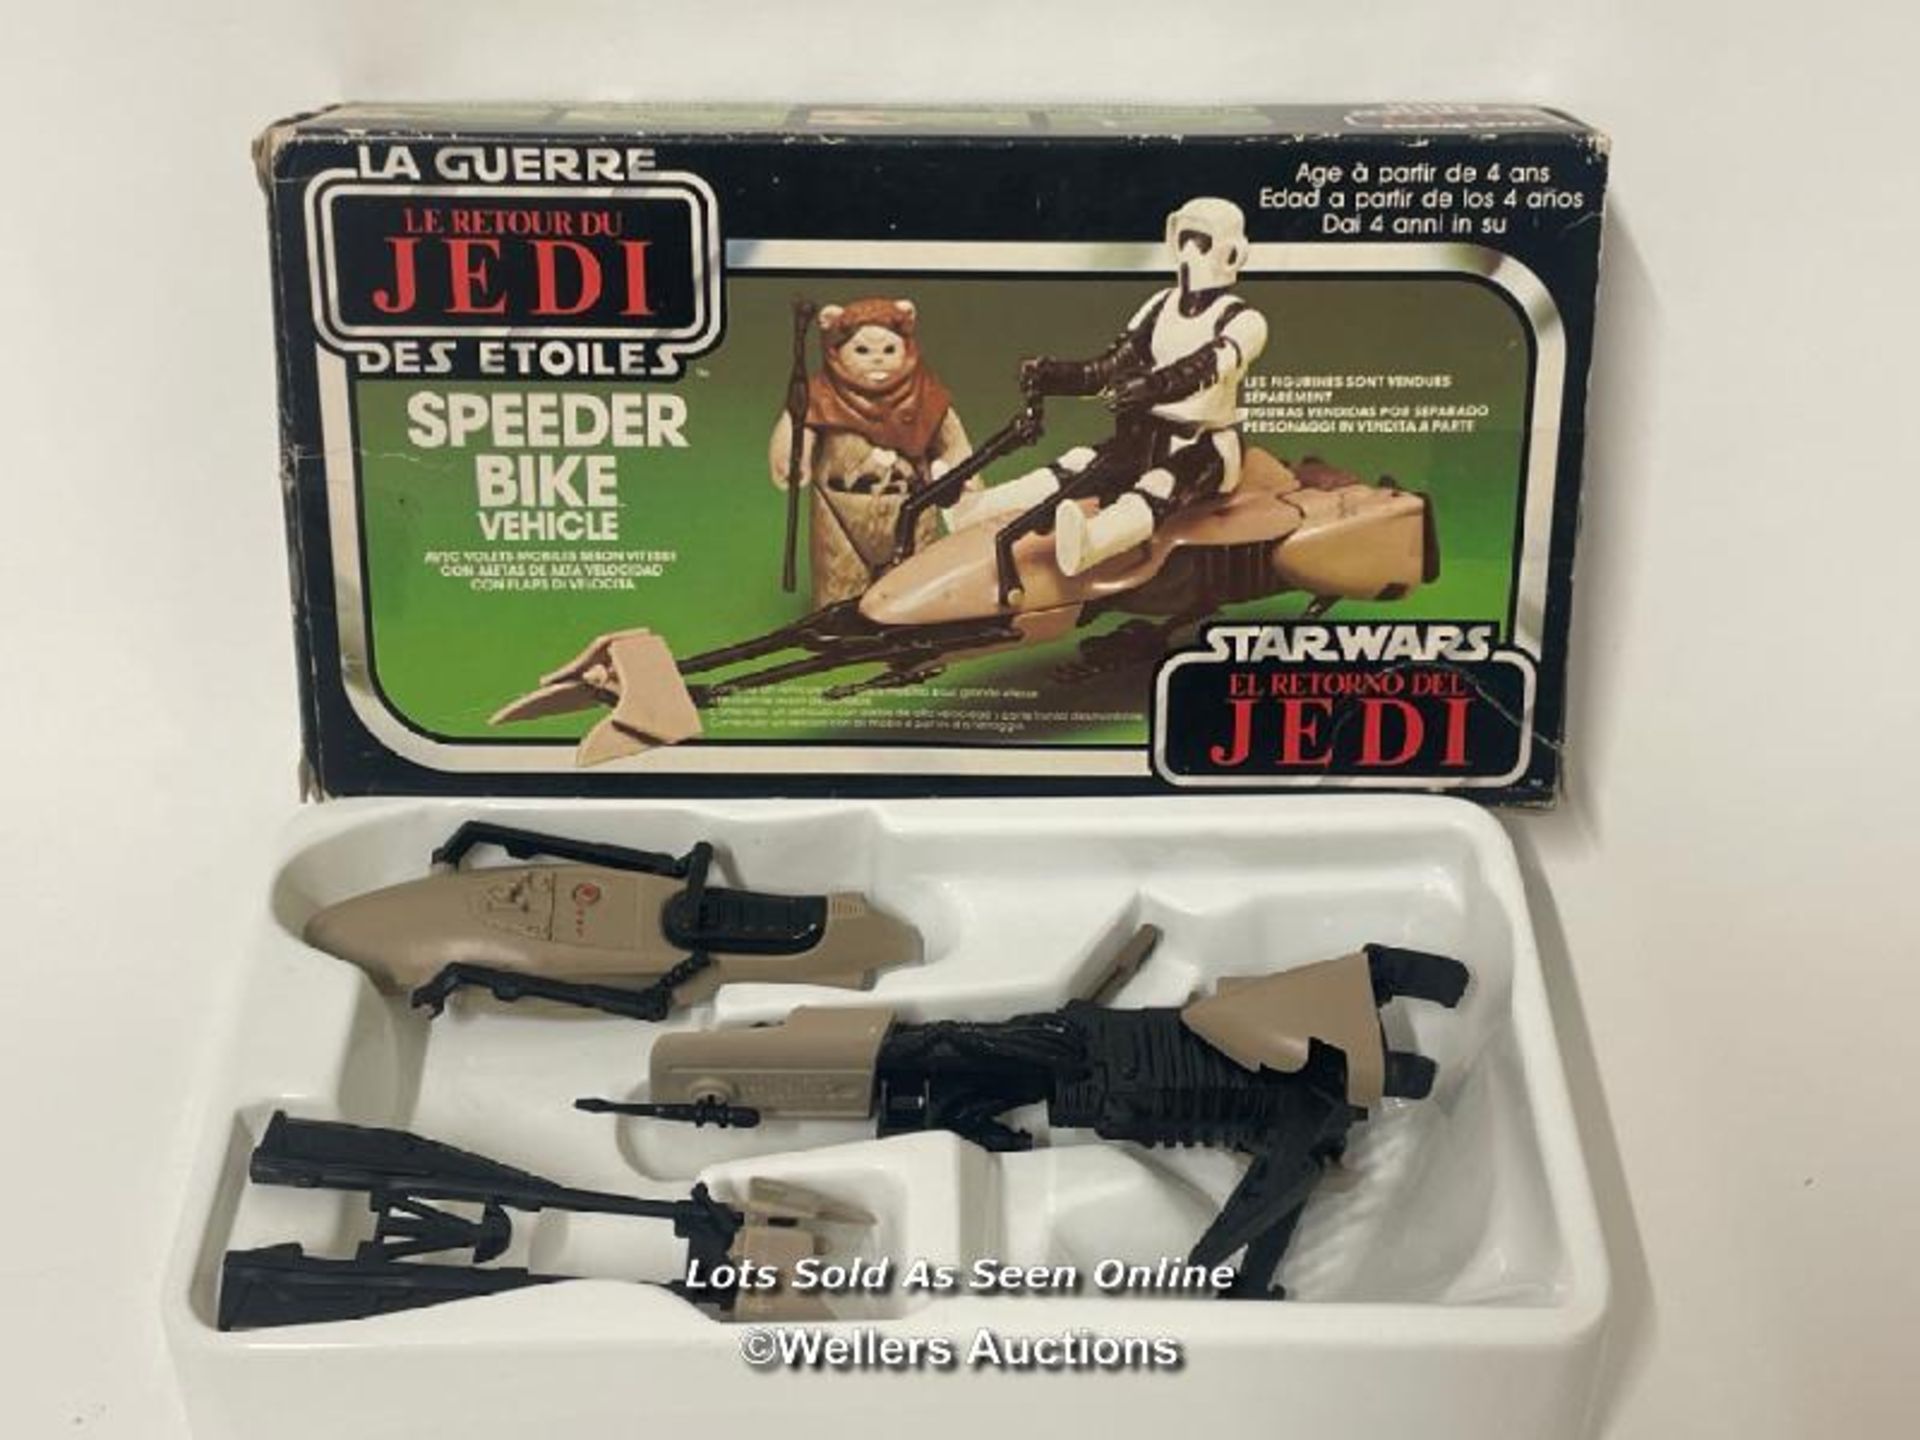 Palitoy Return of the Jedi Speeder Bike in original box, bike in very good condition, box has some